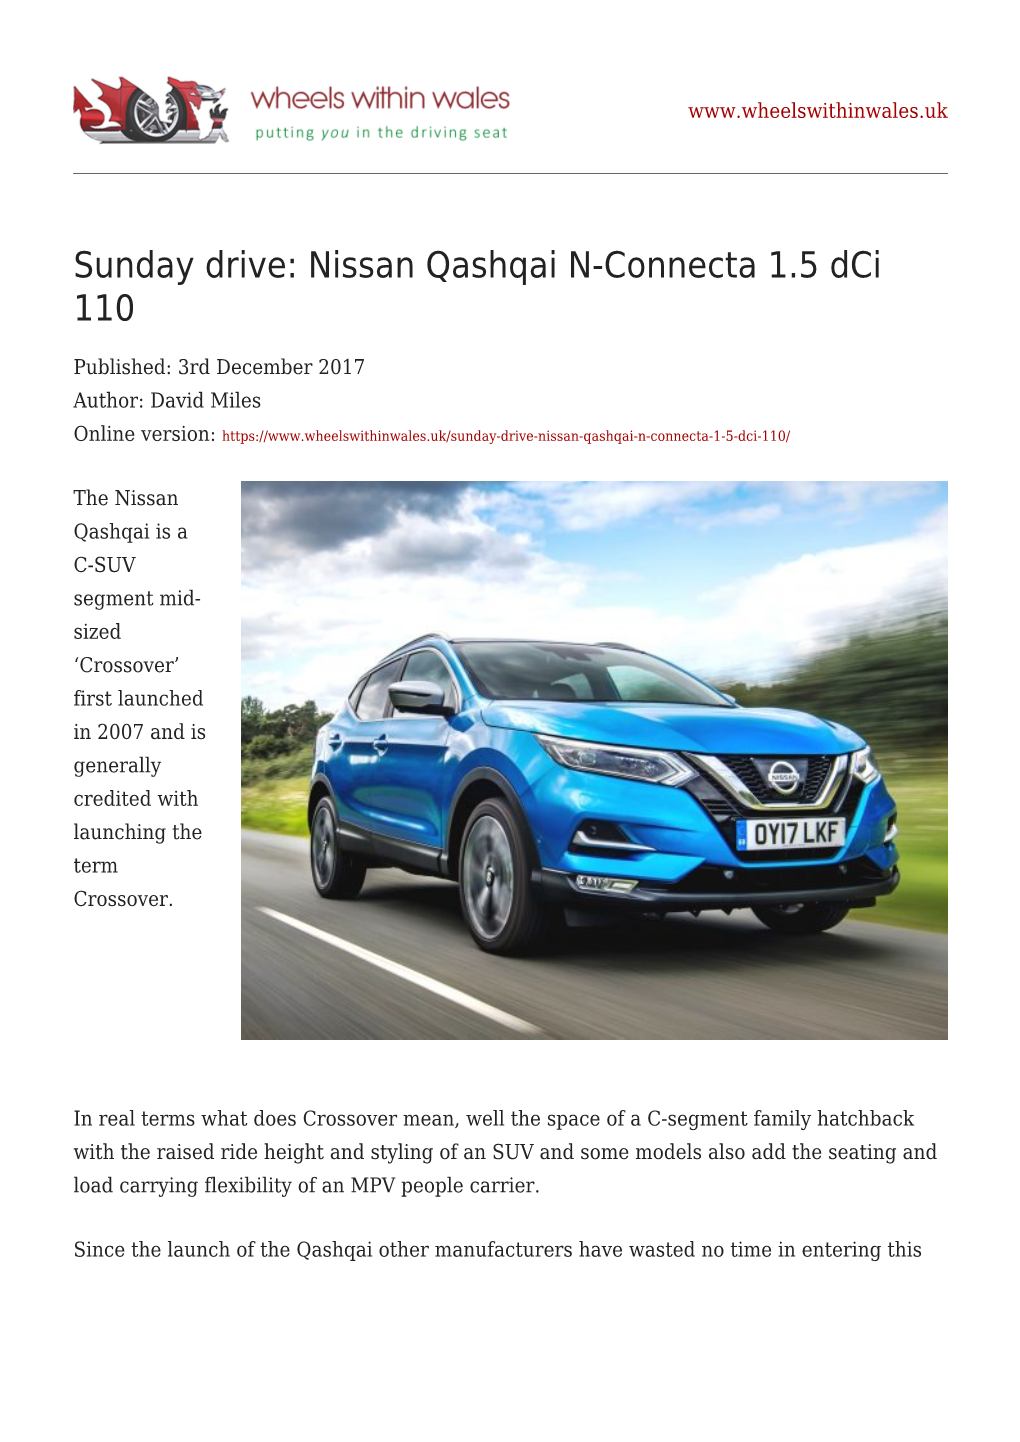 Sunday Drive: Nissan Qashqai N-Connecta 1.5 Dci 110